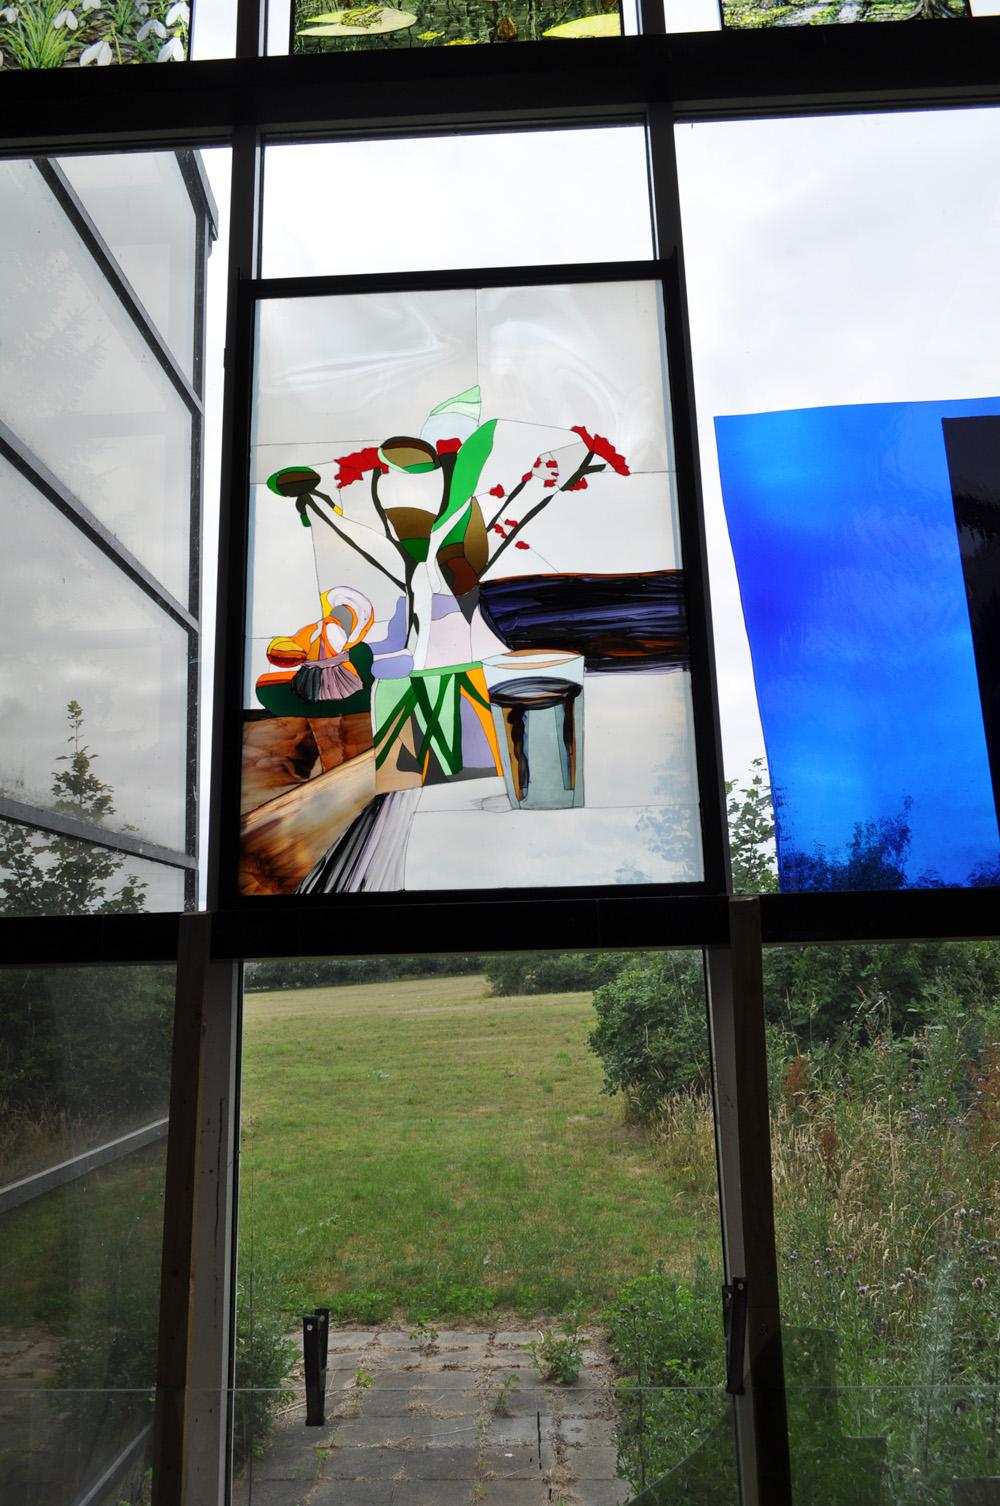 Scandinavian Stained Glass Window,
By Danish Erik A. Frandsen, glass mosaic / painting (2017)
Opstilling af blomstervase (Arrangement of flower vase)
126 cm H x 86 cm W

Erik A. Frandsen is one of Denmark's most prominent artists. He has been